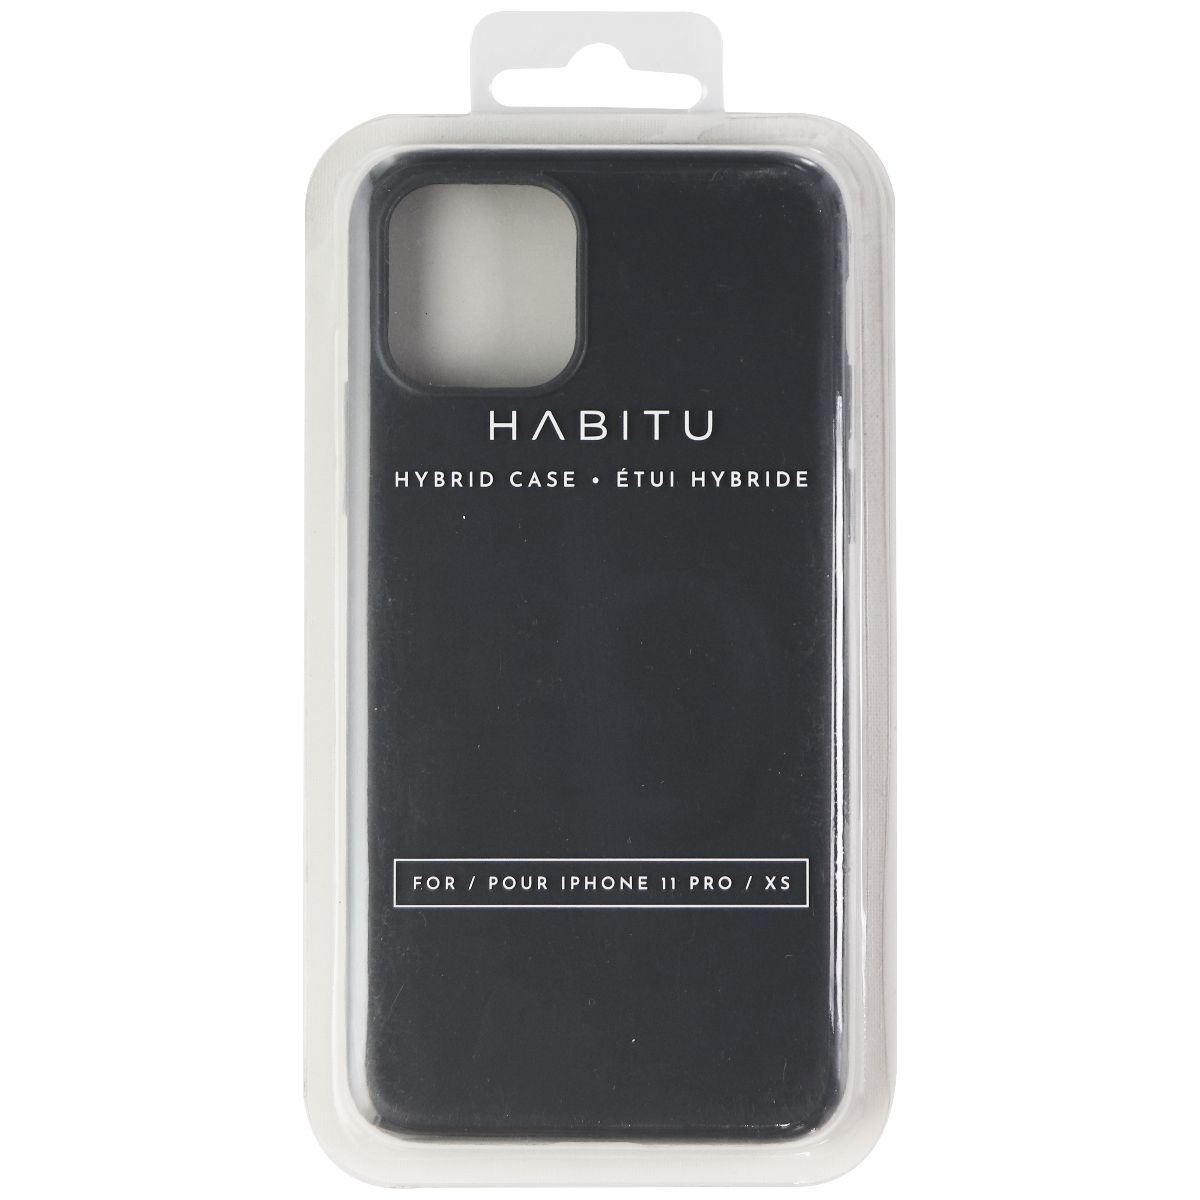 Habitu Hybrid Slim Protective Case For IPhone 11 Pro / XS - Gray